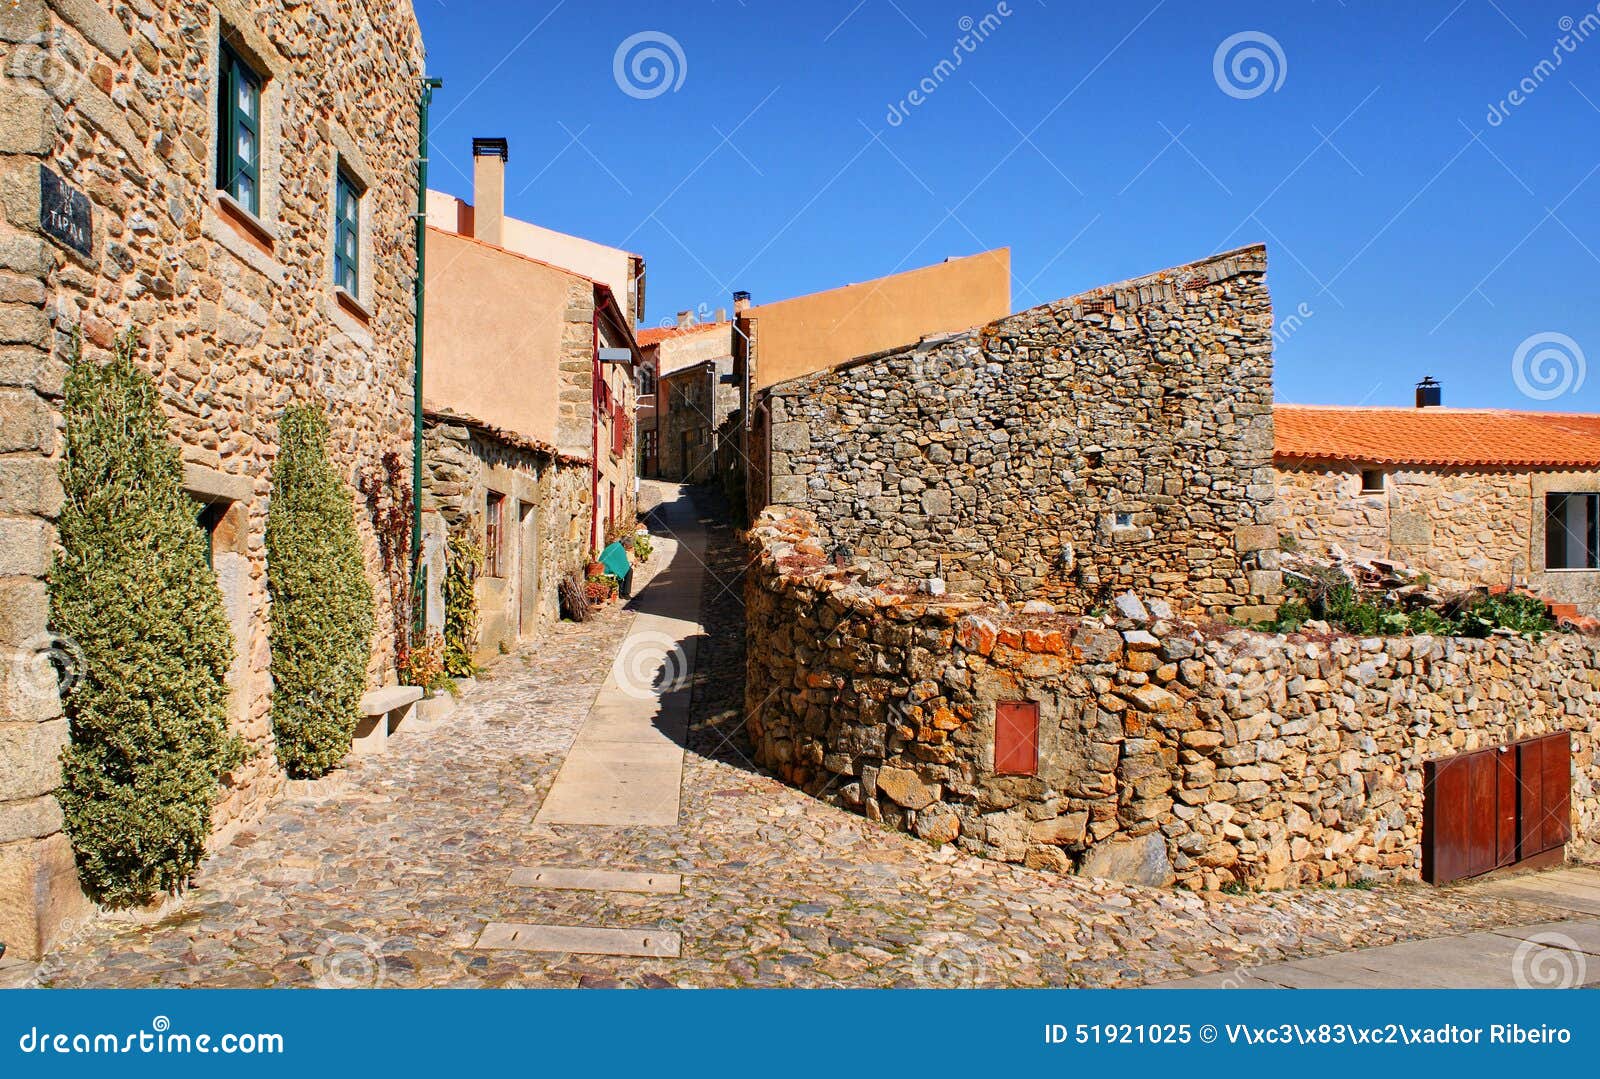 castelo rodrigo historical village